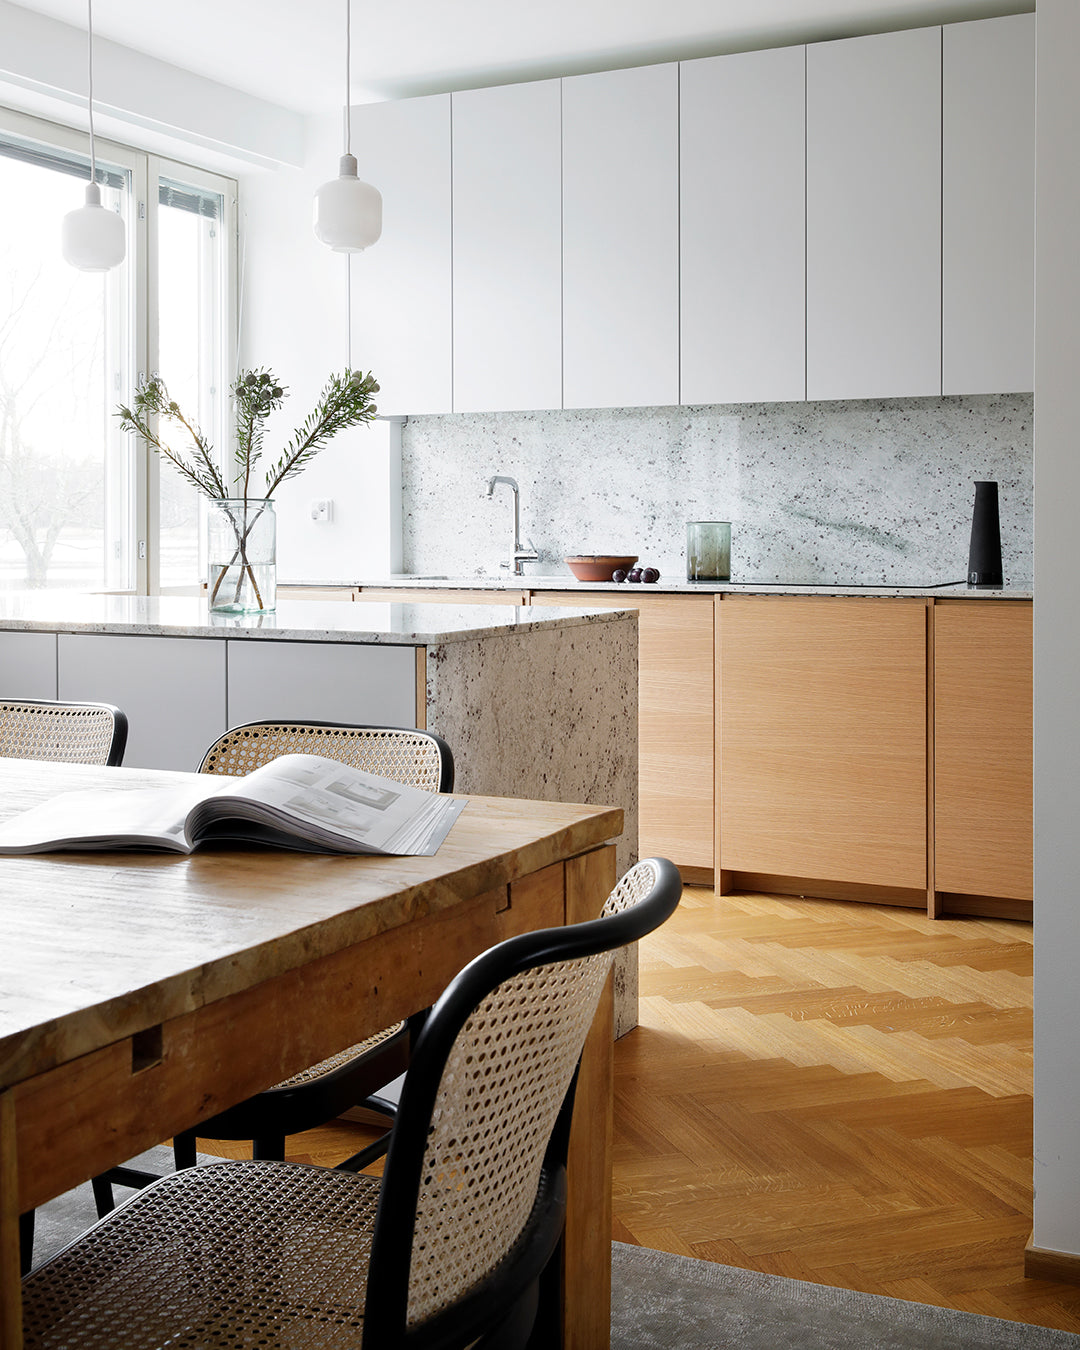 Kitchen design ideas and inspiration | A.S.Helsingö